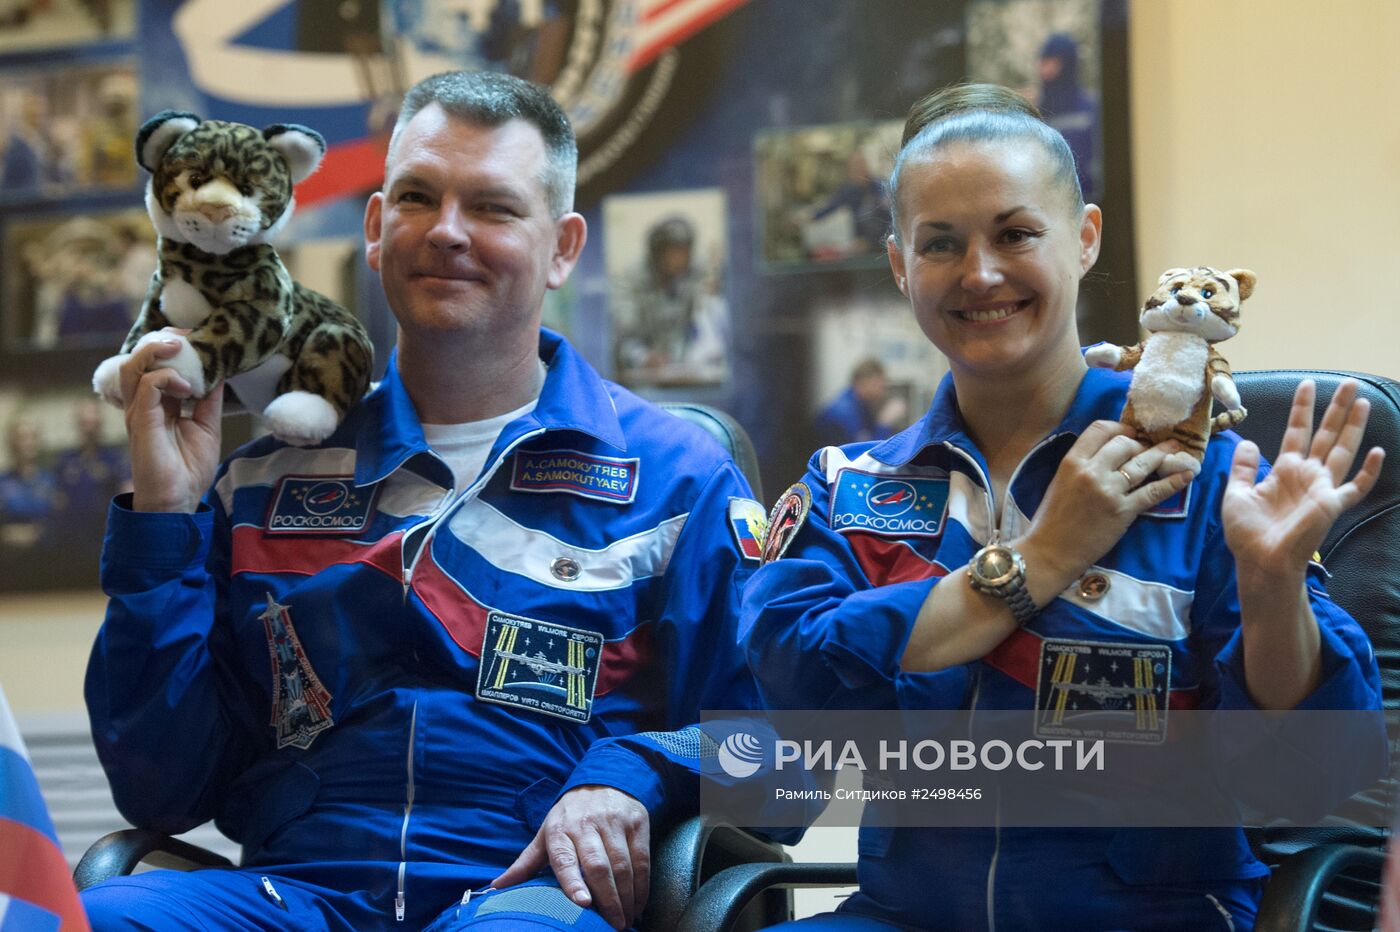 Пресс-конференция экипажа космического корабля "Союз ТМА-14М" на космодроме "Байконур"